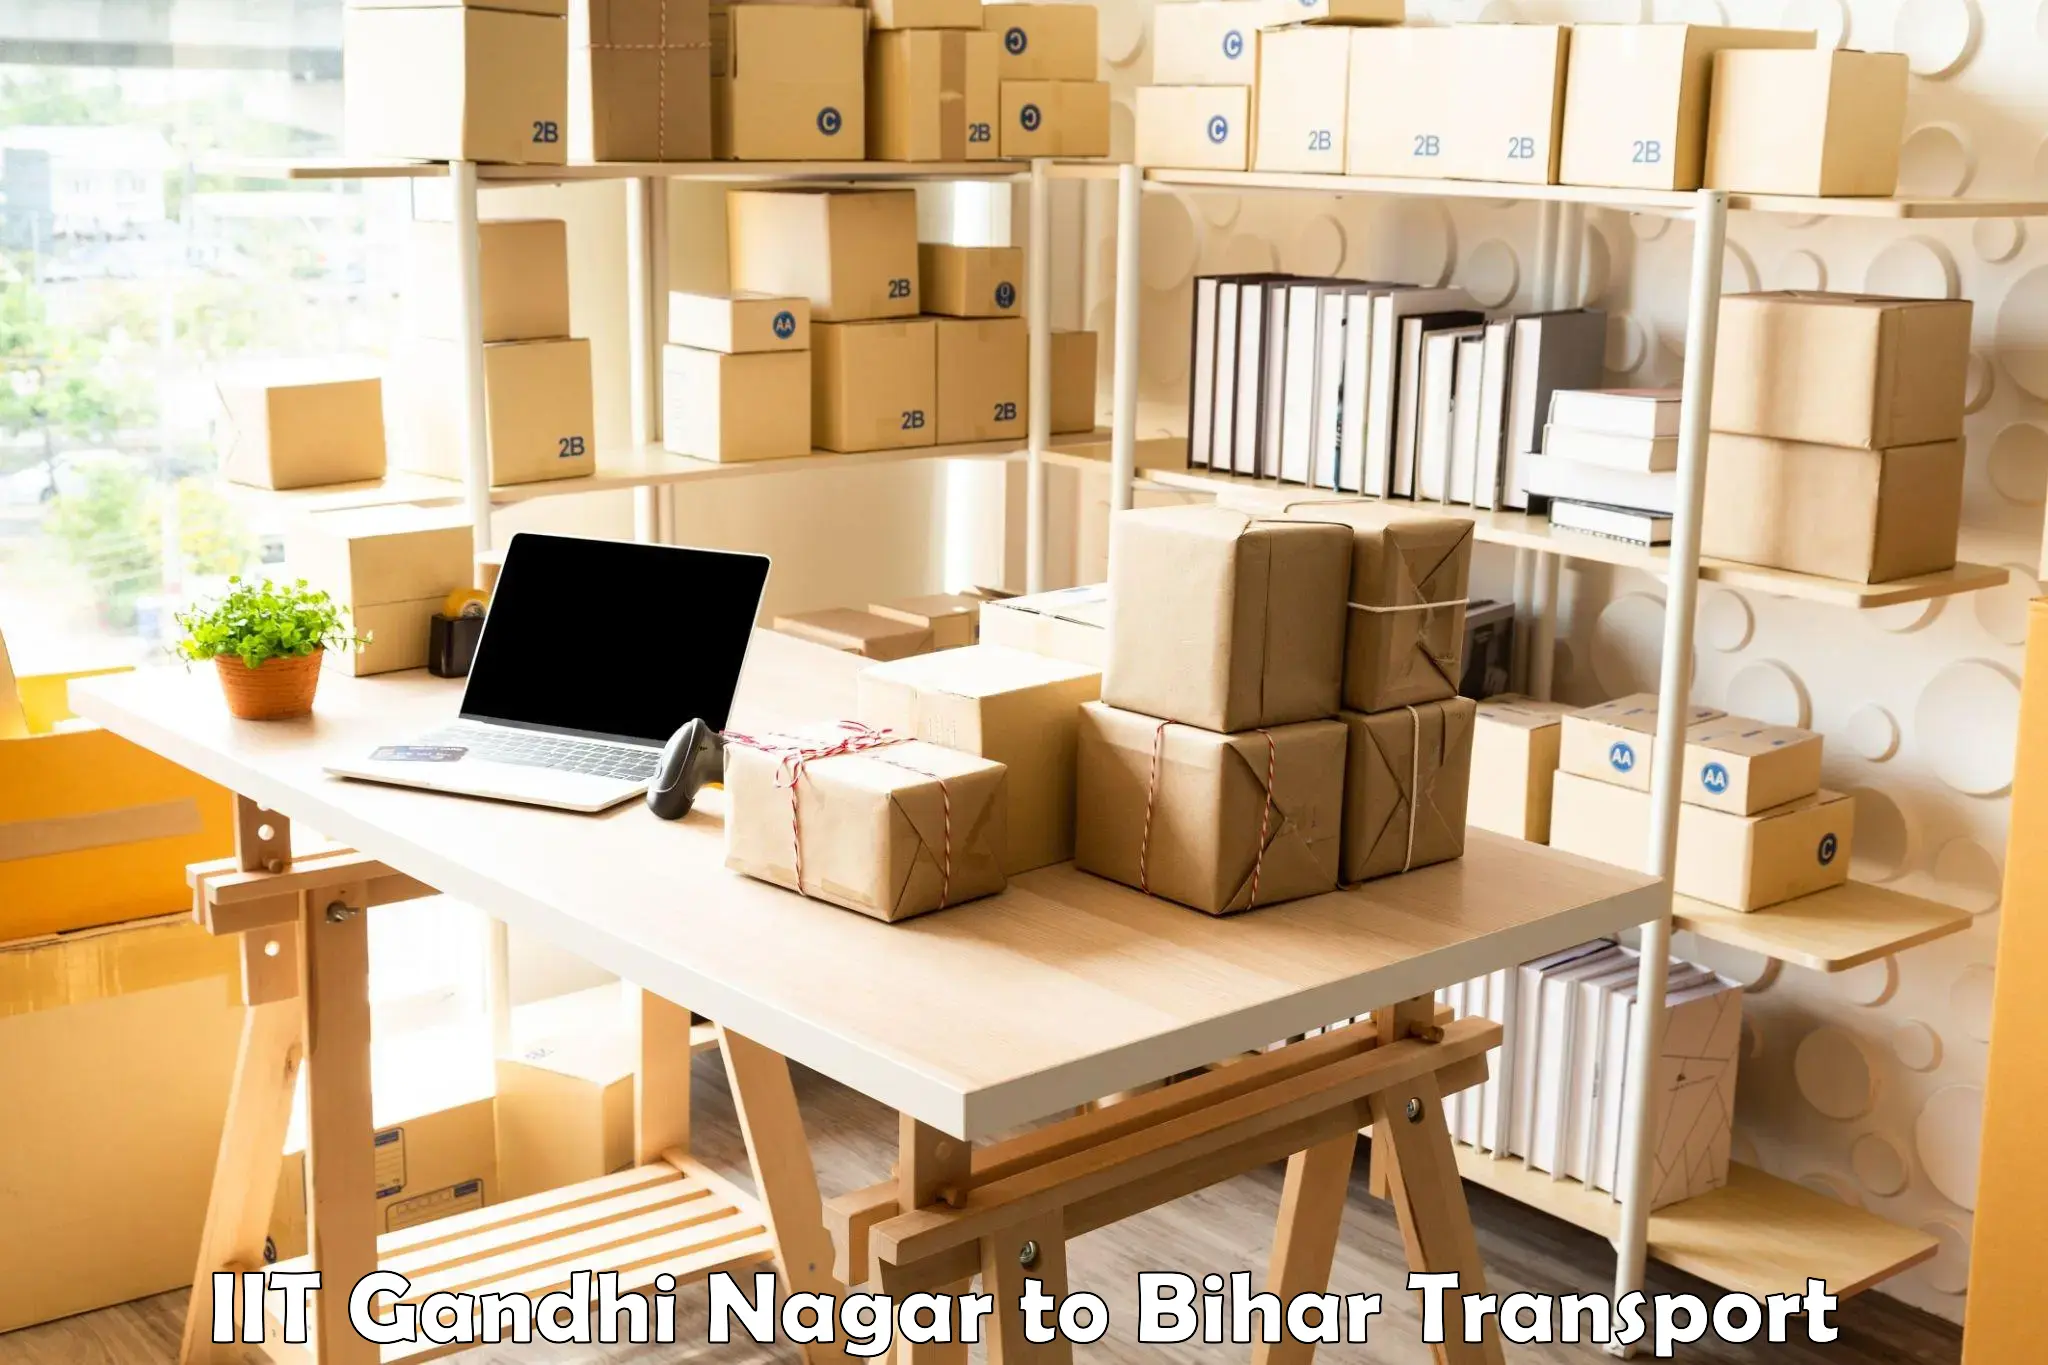 Container transport service IIT Gandhi Nagar to Saran